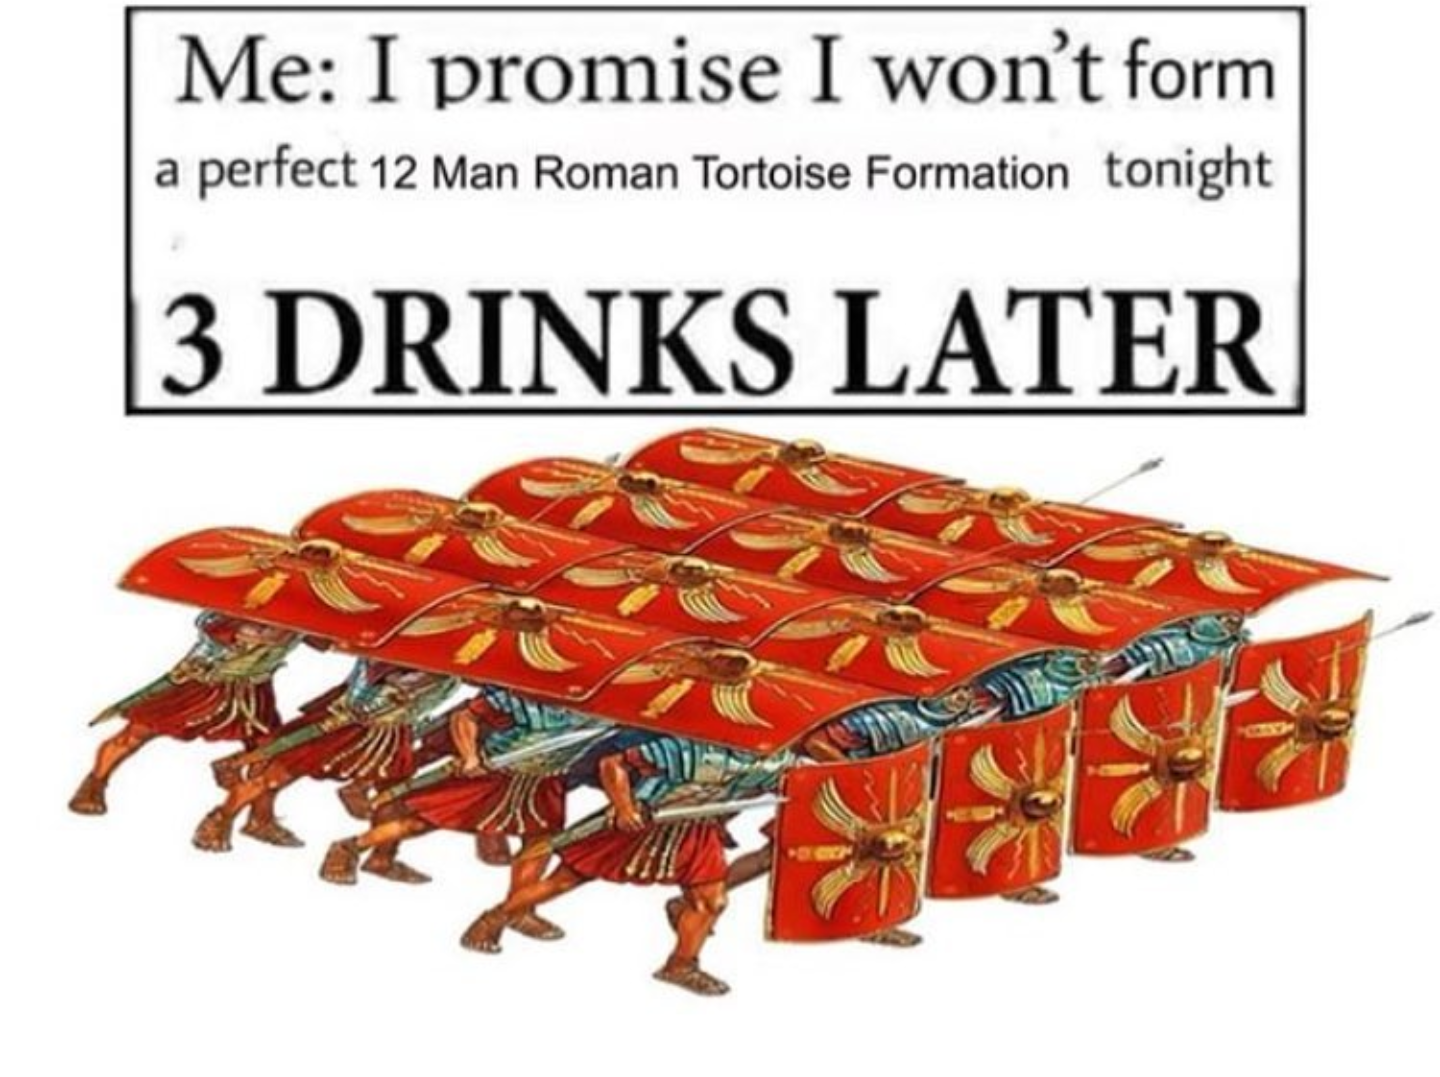 roman tortoise formation - | Me I promise I won't form a perfect 12 Man Roman Tortoise Formation tonight |3 Drinks Later